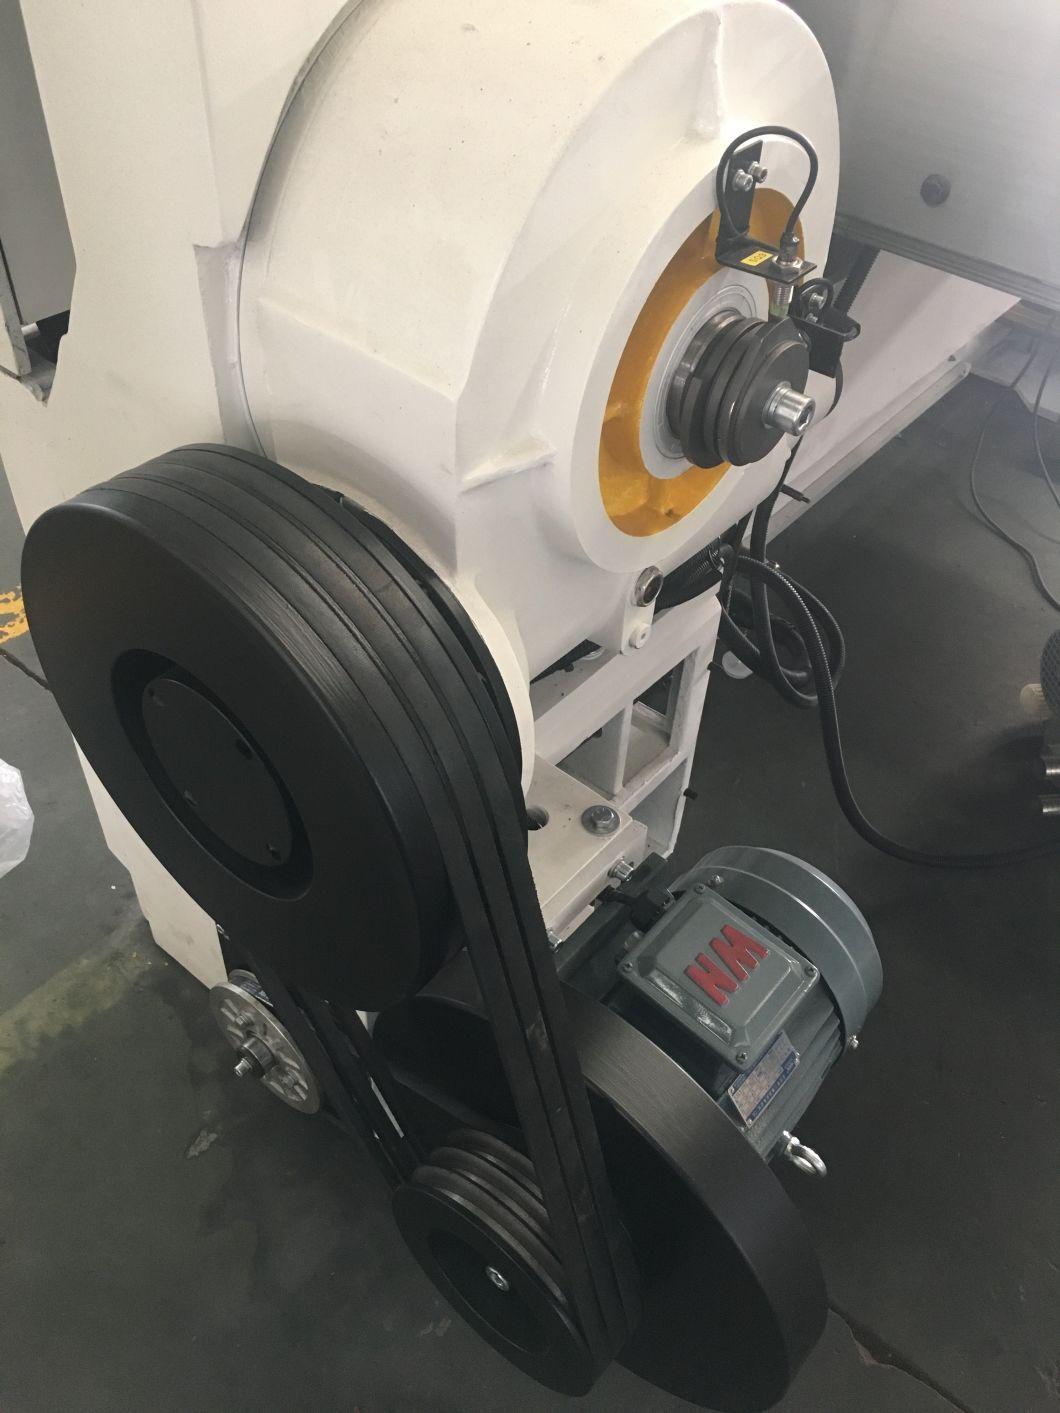 Full Automatic High Quality High Speed Intelligent Guillotine Program Control Hydraulic Heavy Duty Paper Cutting Machine P